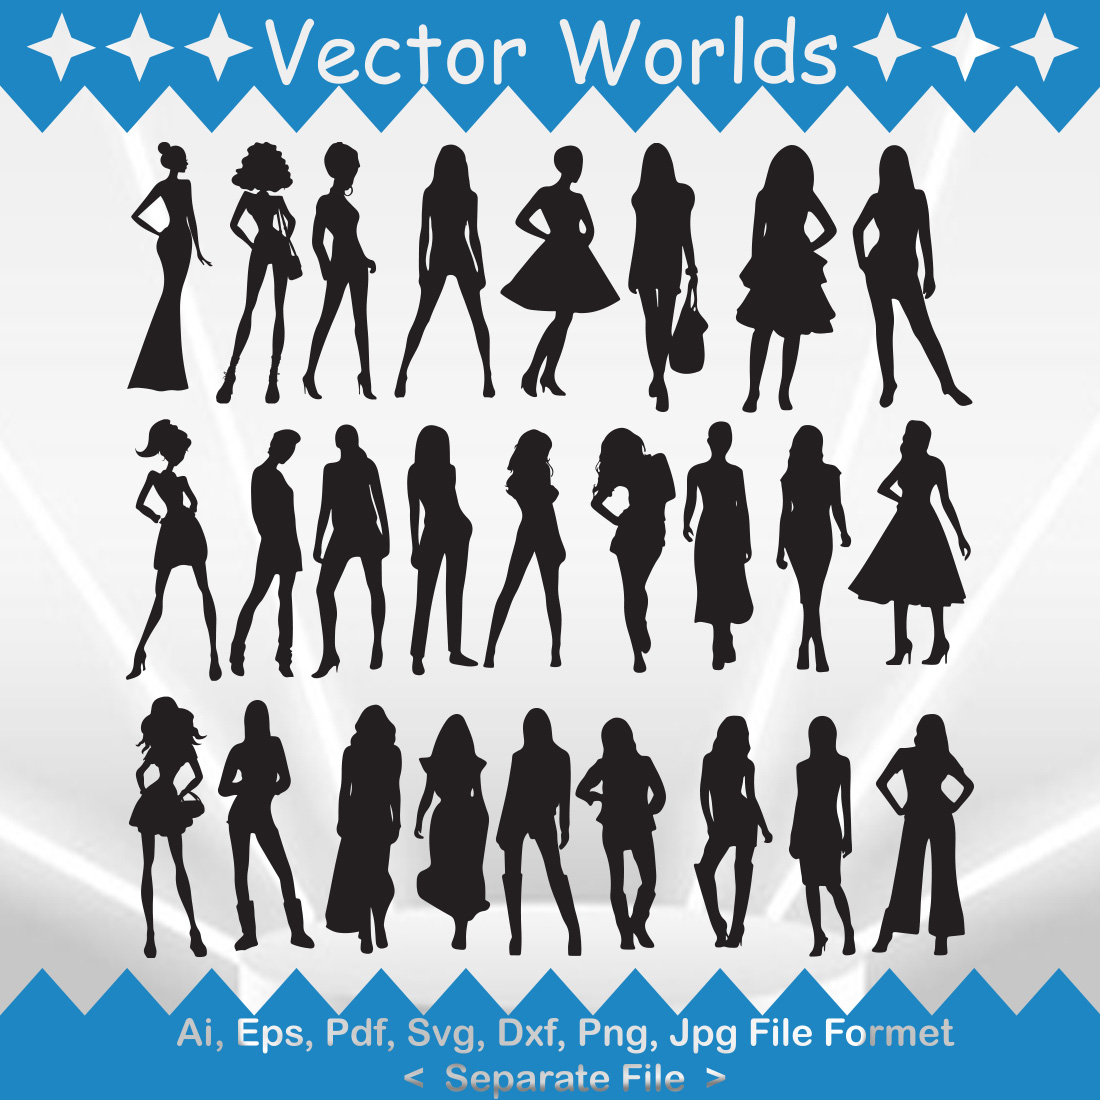 Model Girls SVG Vector Design cover image.